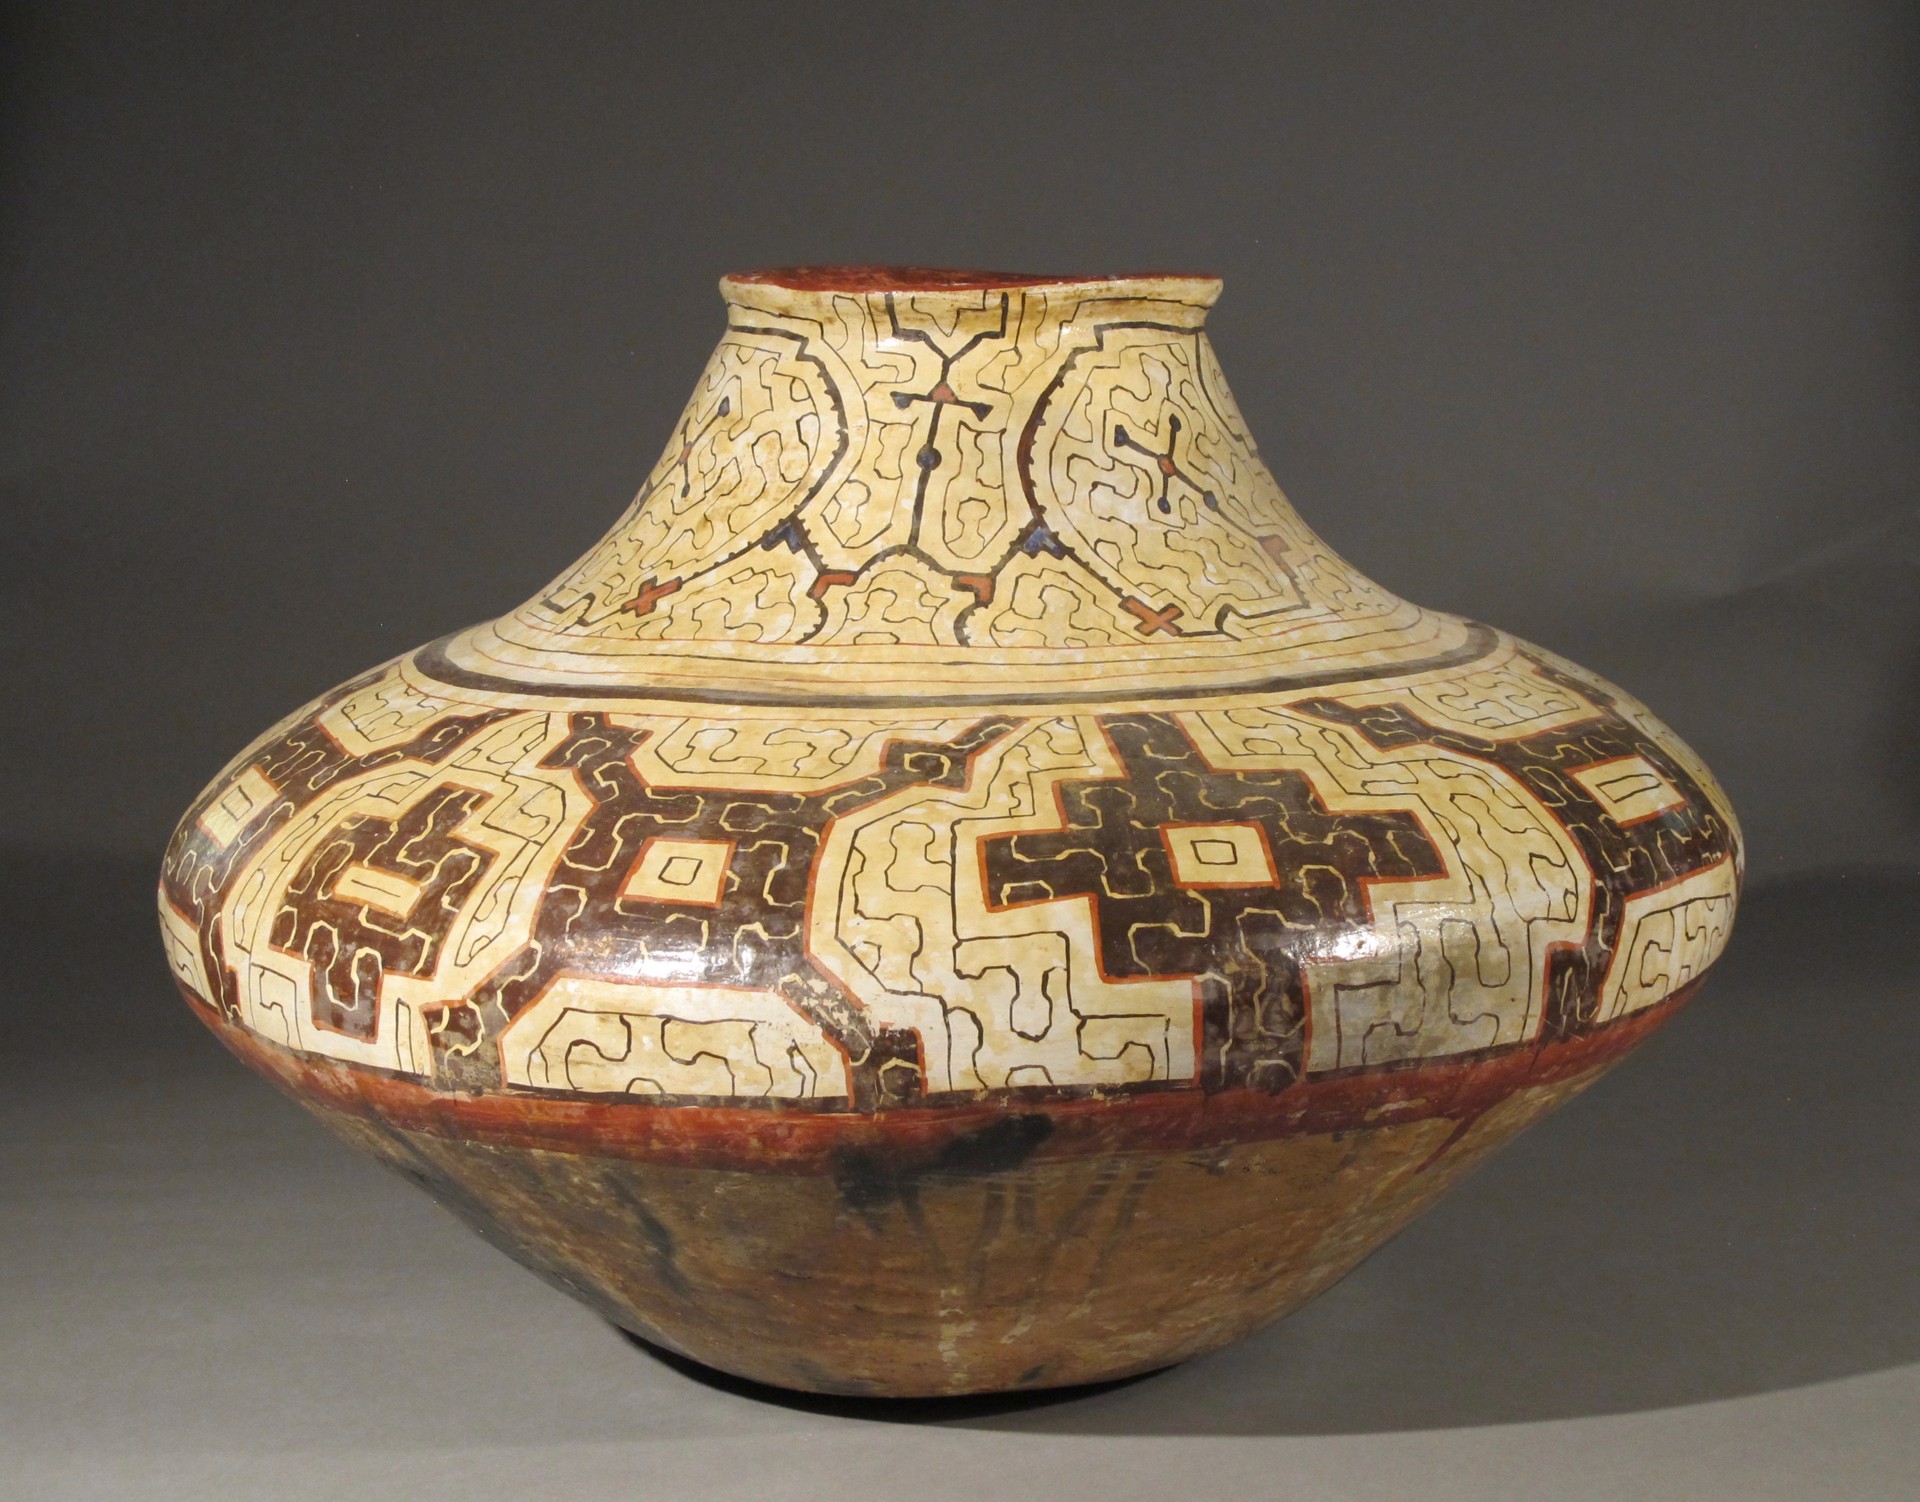 Shibipo Geometric pot by Amazon Pottery